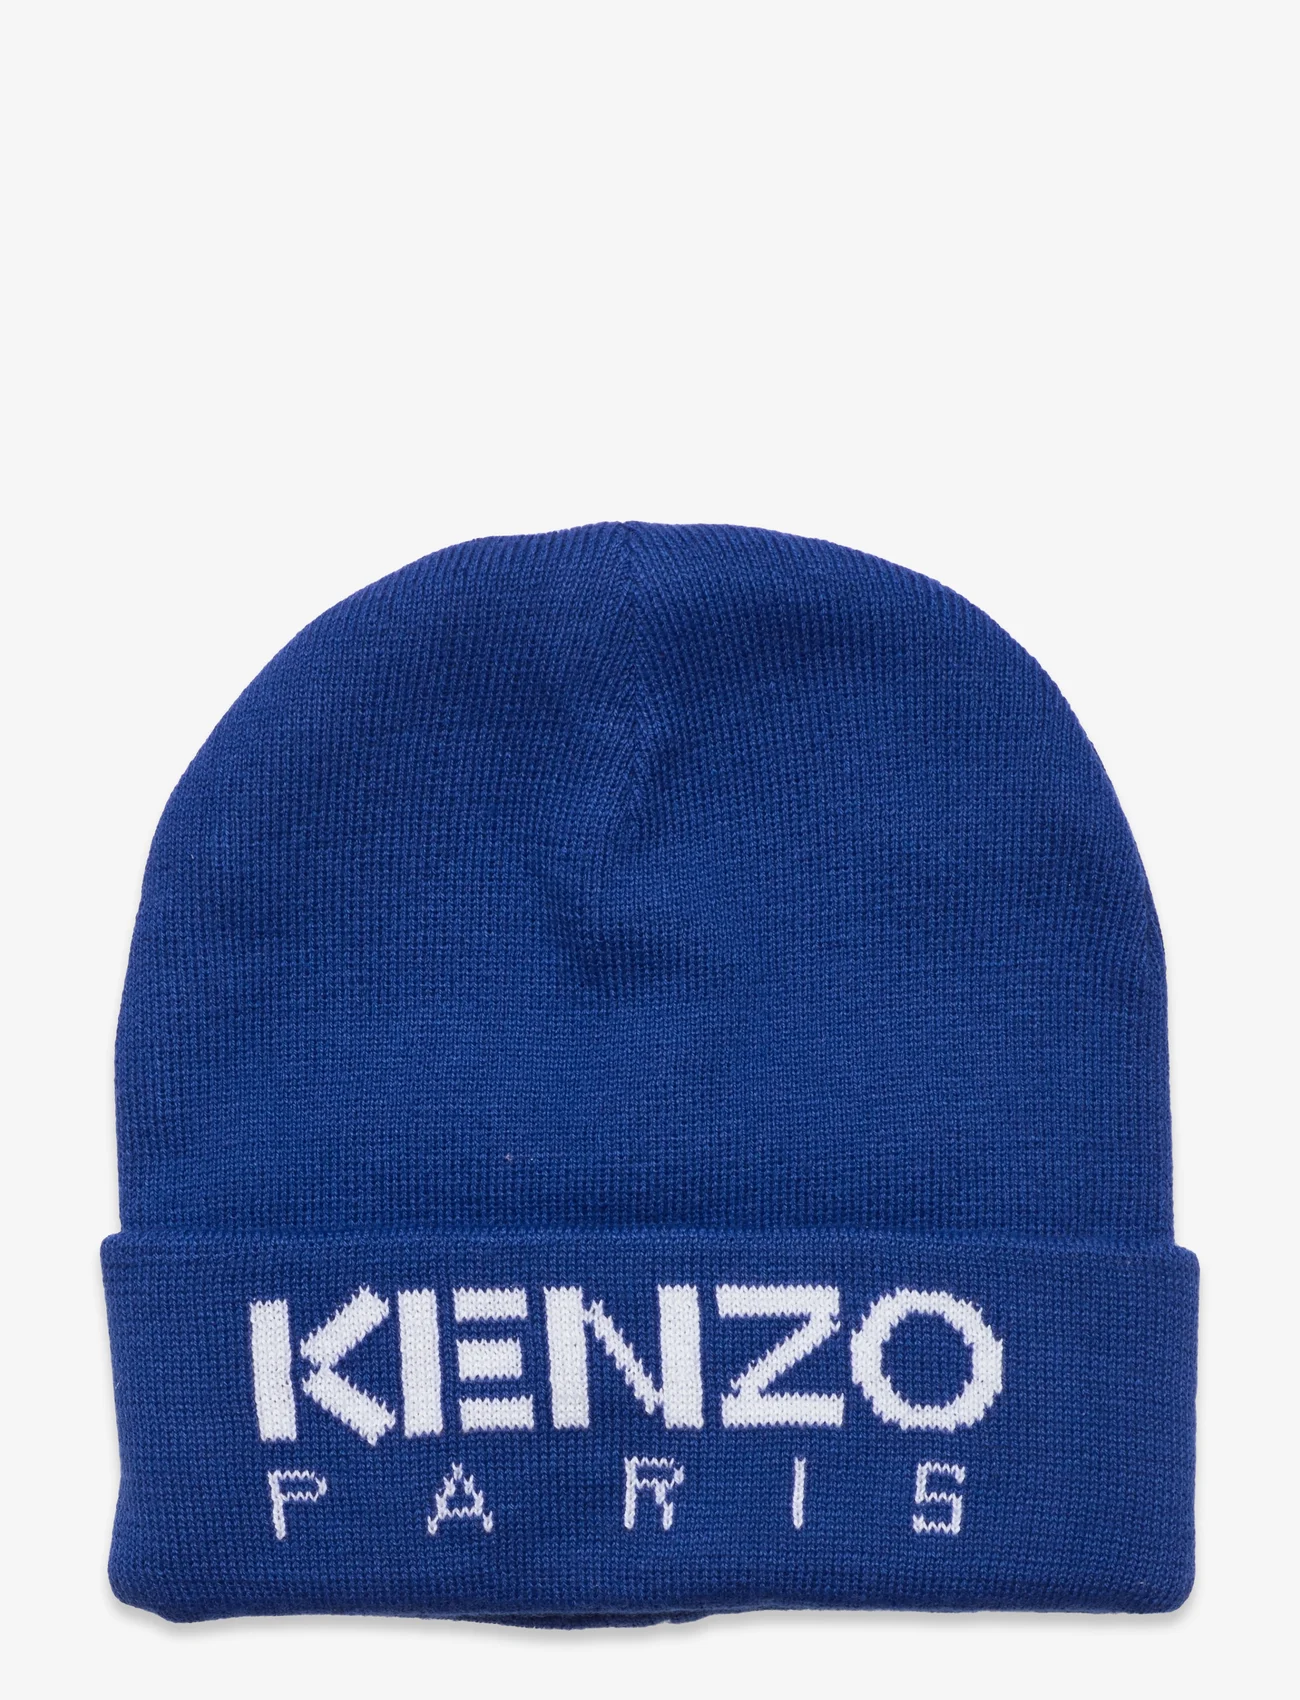 Kenzo - PULL ON HAT - kids - blue - 0